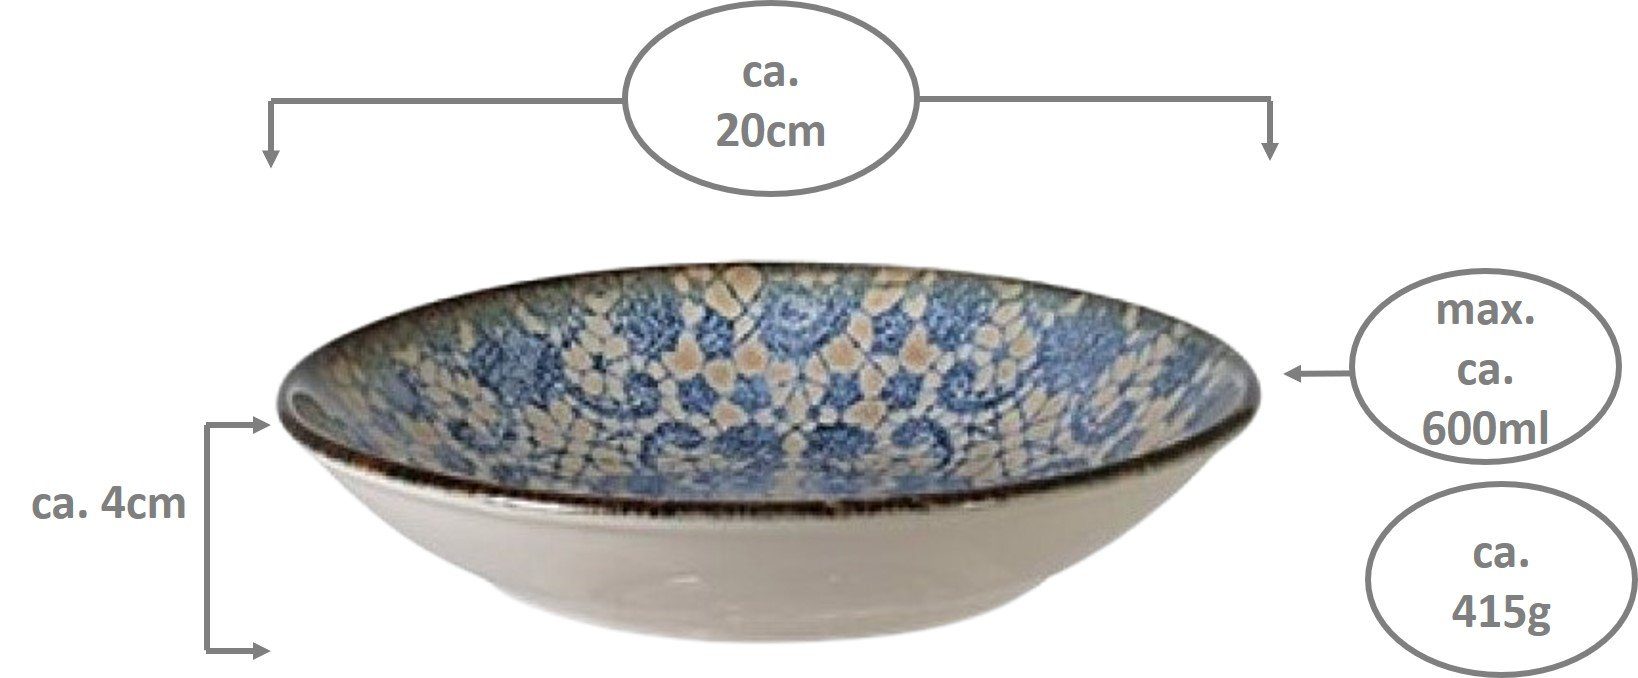 tief stoßfest Stück Teller Emilja 1 besonders Valencia 20cm - Porzellan, Suppenteller